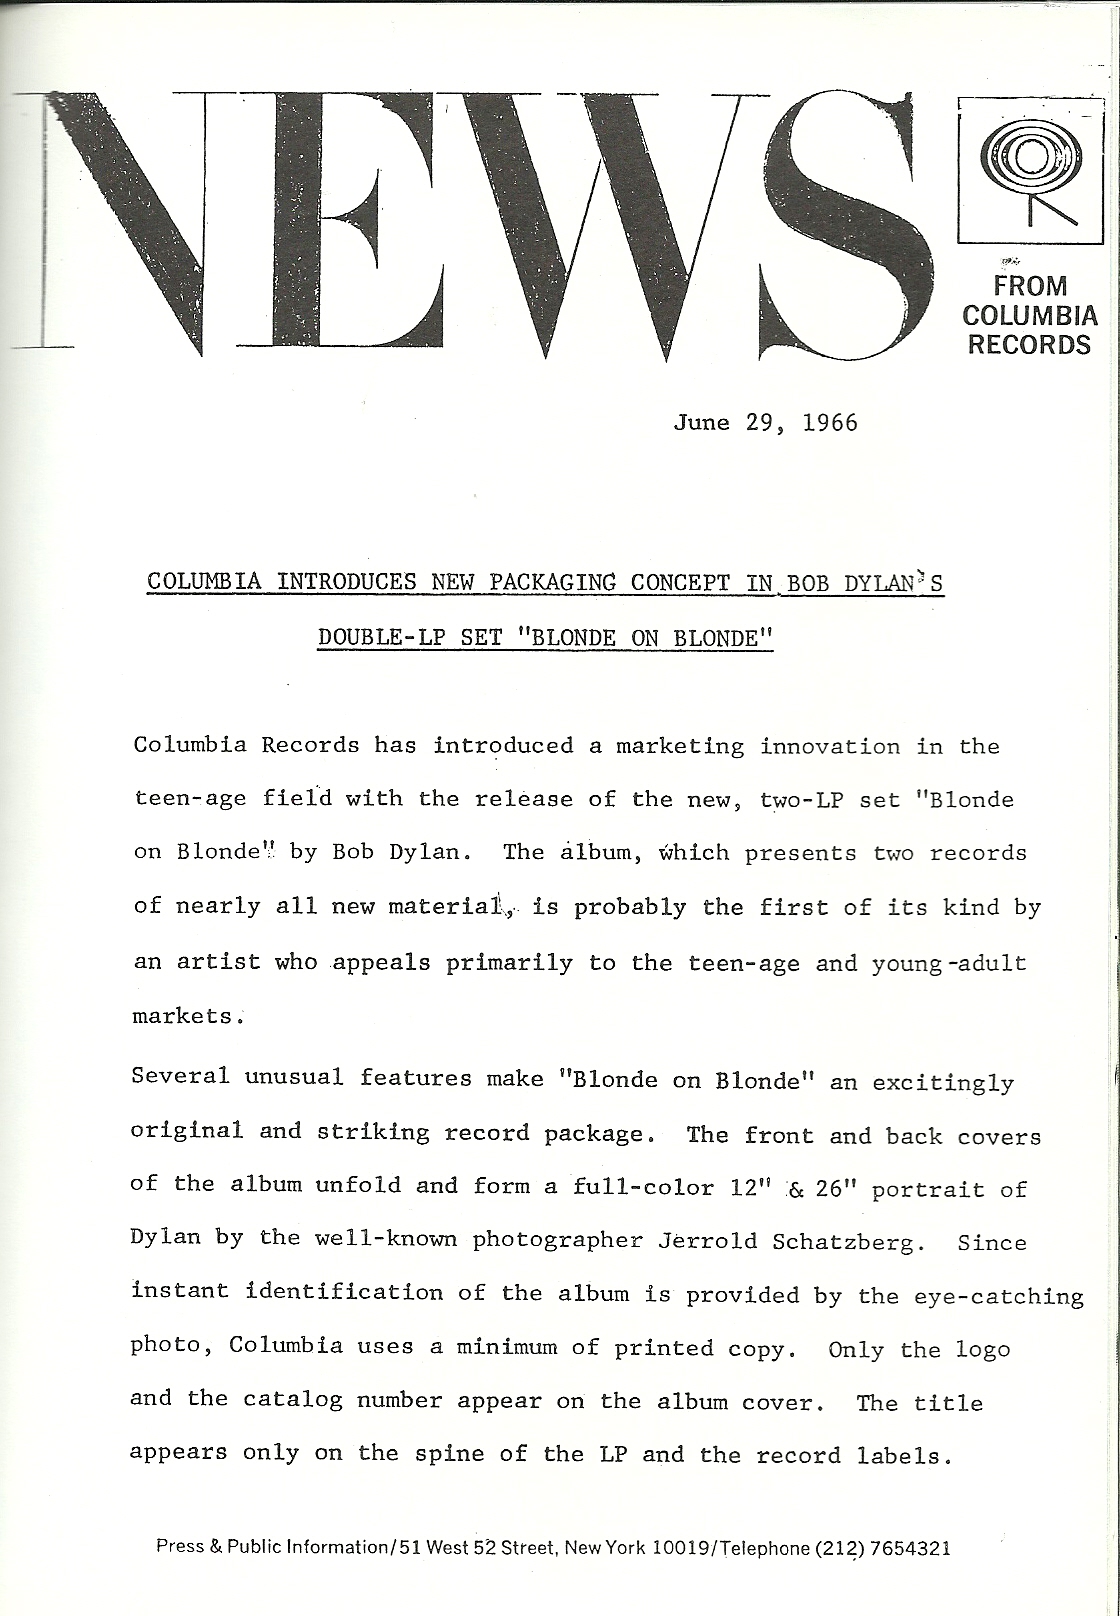 Columbia press release Jun 29 1966